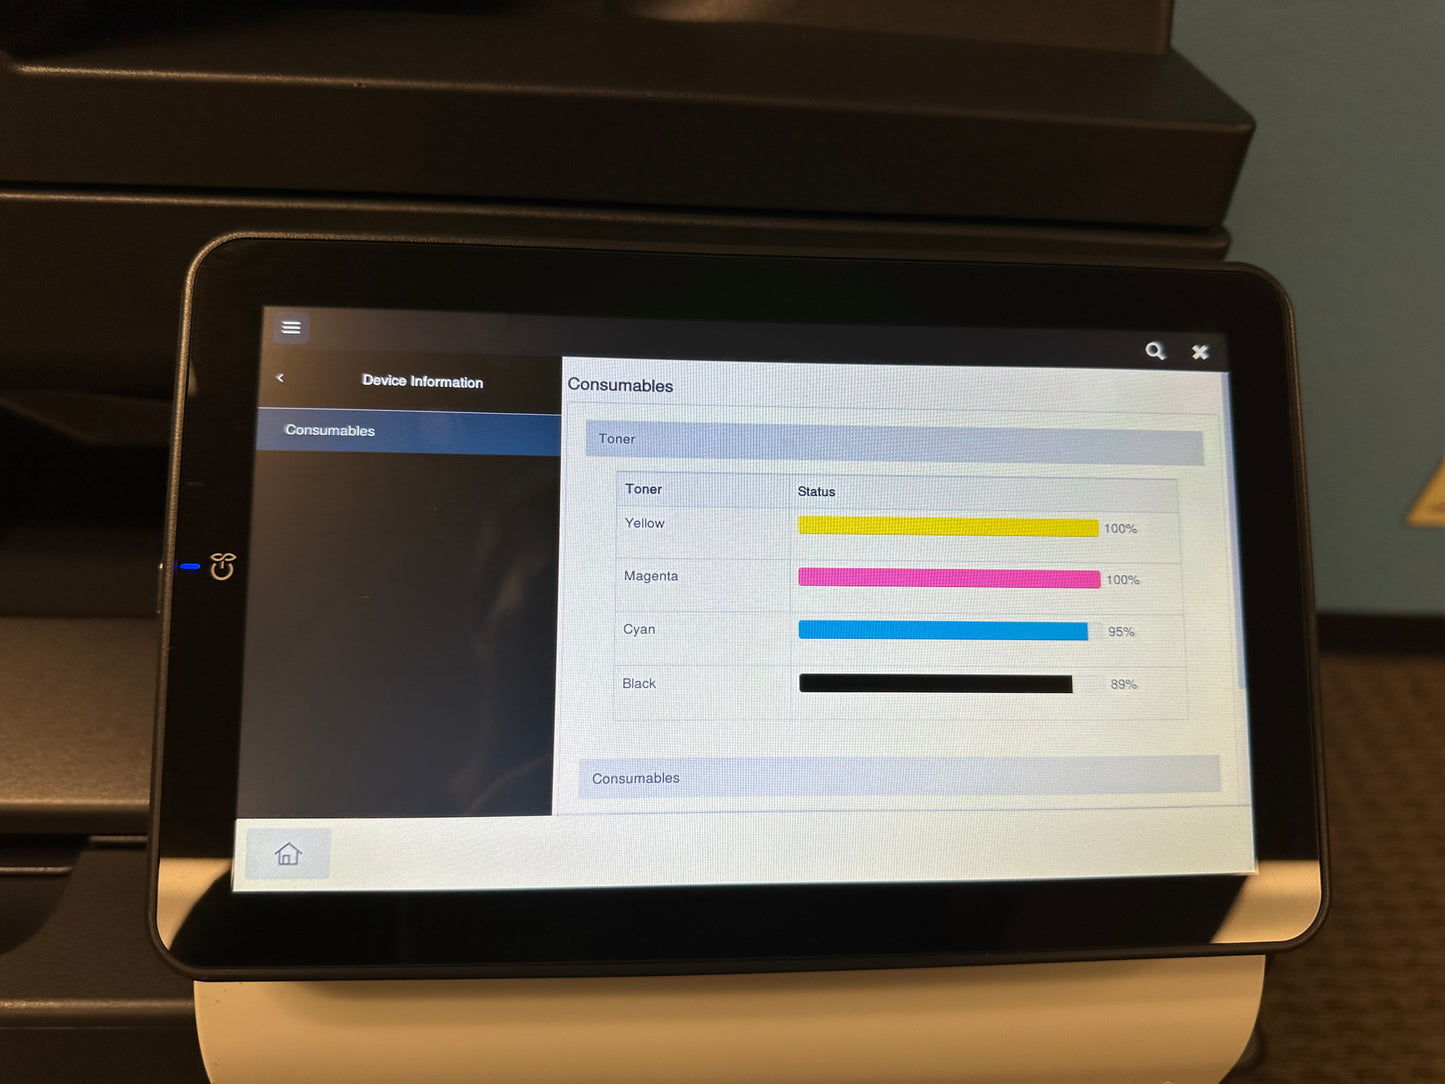 WOW Demo Unit Konica Minolta Bizhub C750i Color Copier Printer Scan Low 3k Usage